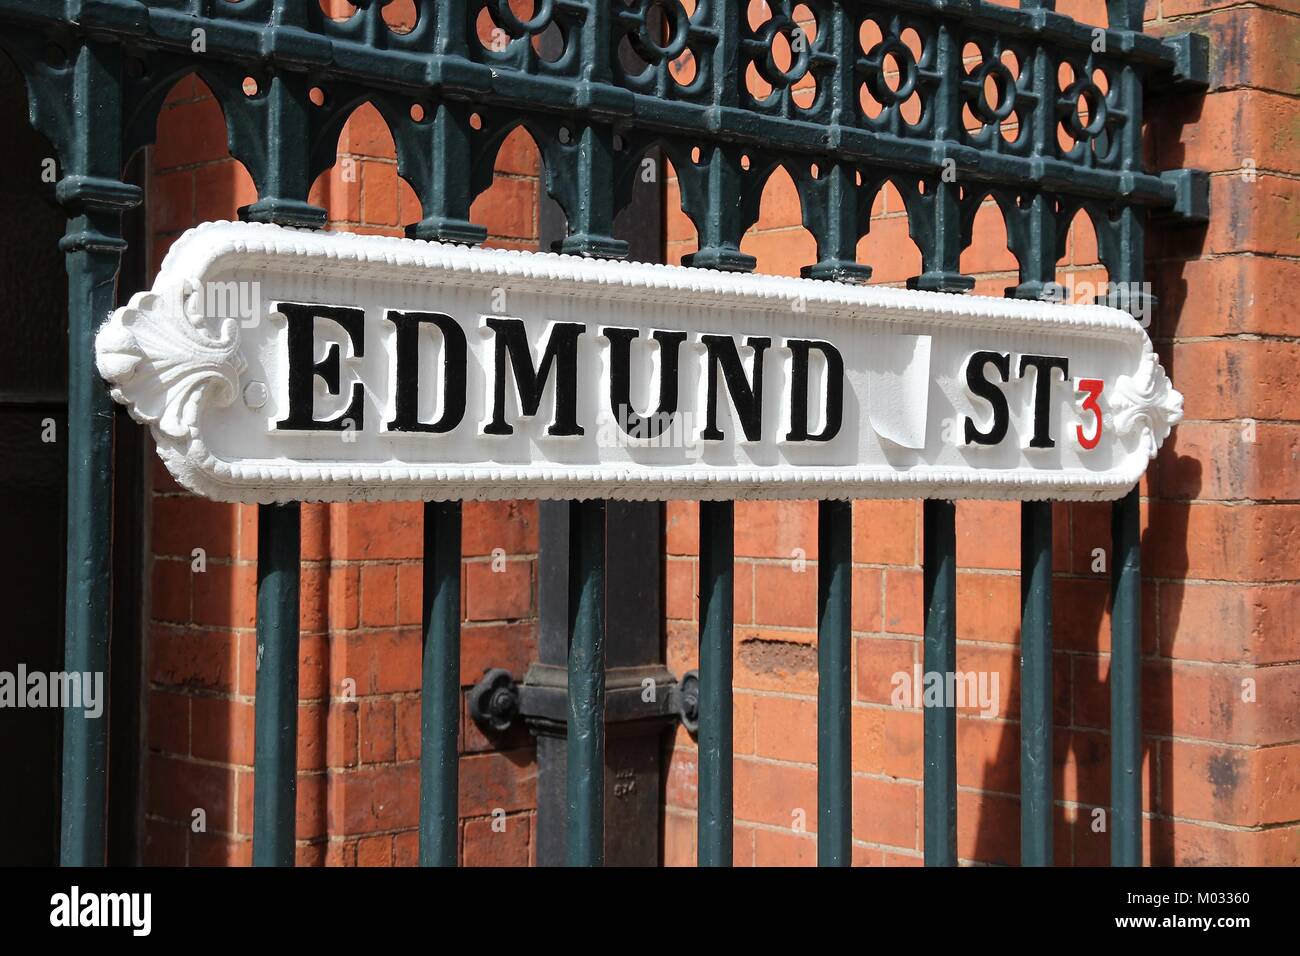 Birmingham - Edmund street sign. West Midlands, England. Stock Photo